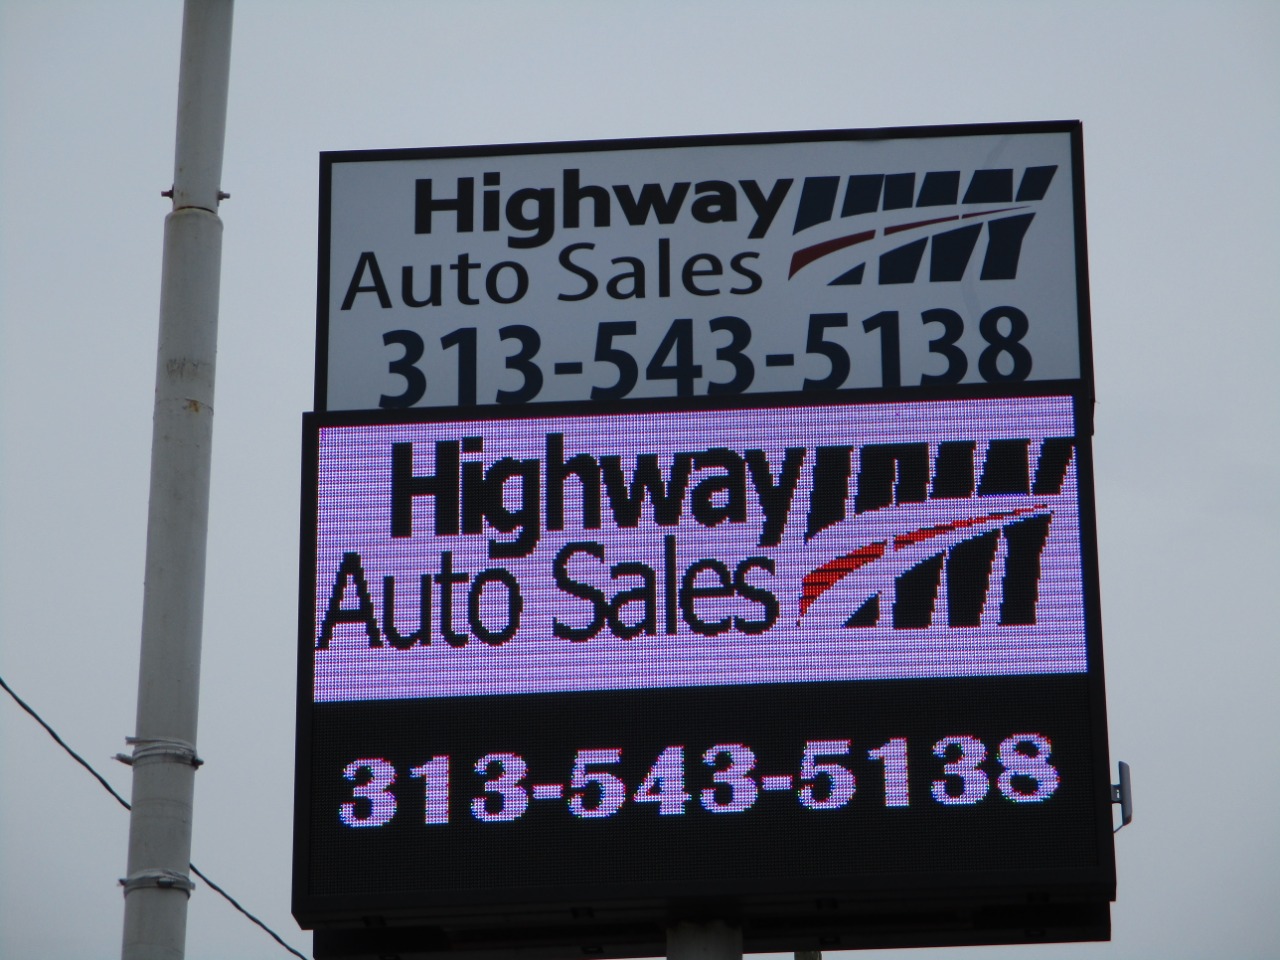 Highway Auto Sales